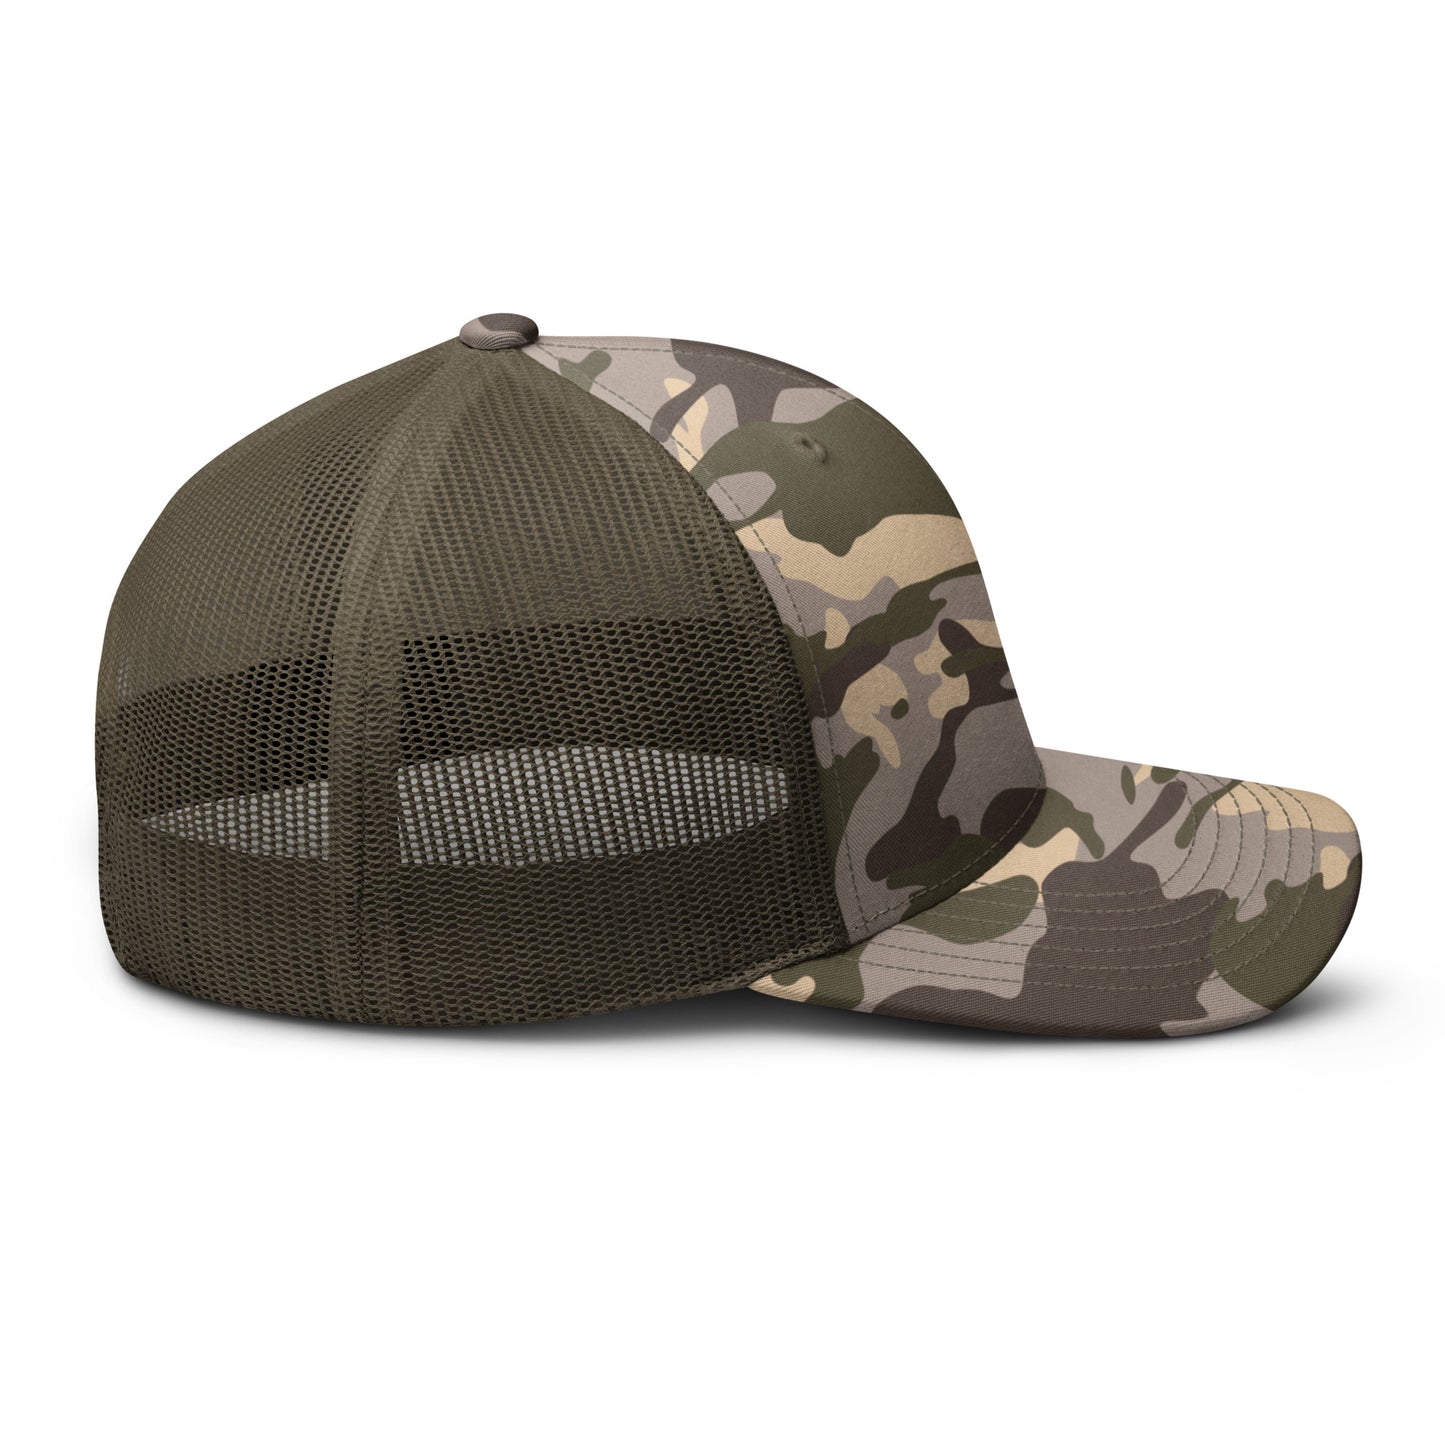 Patriot Lives Matter Camouflage trucker hat